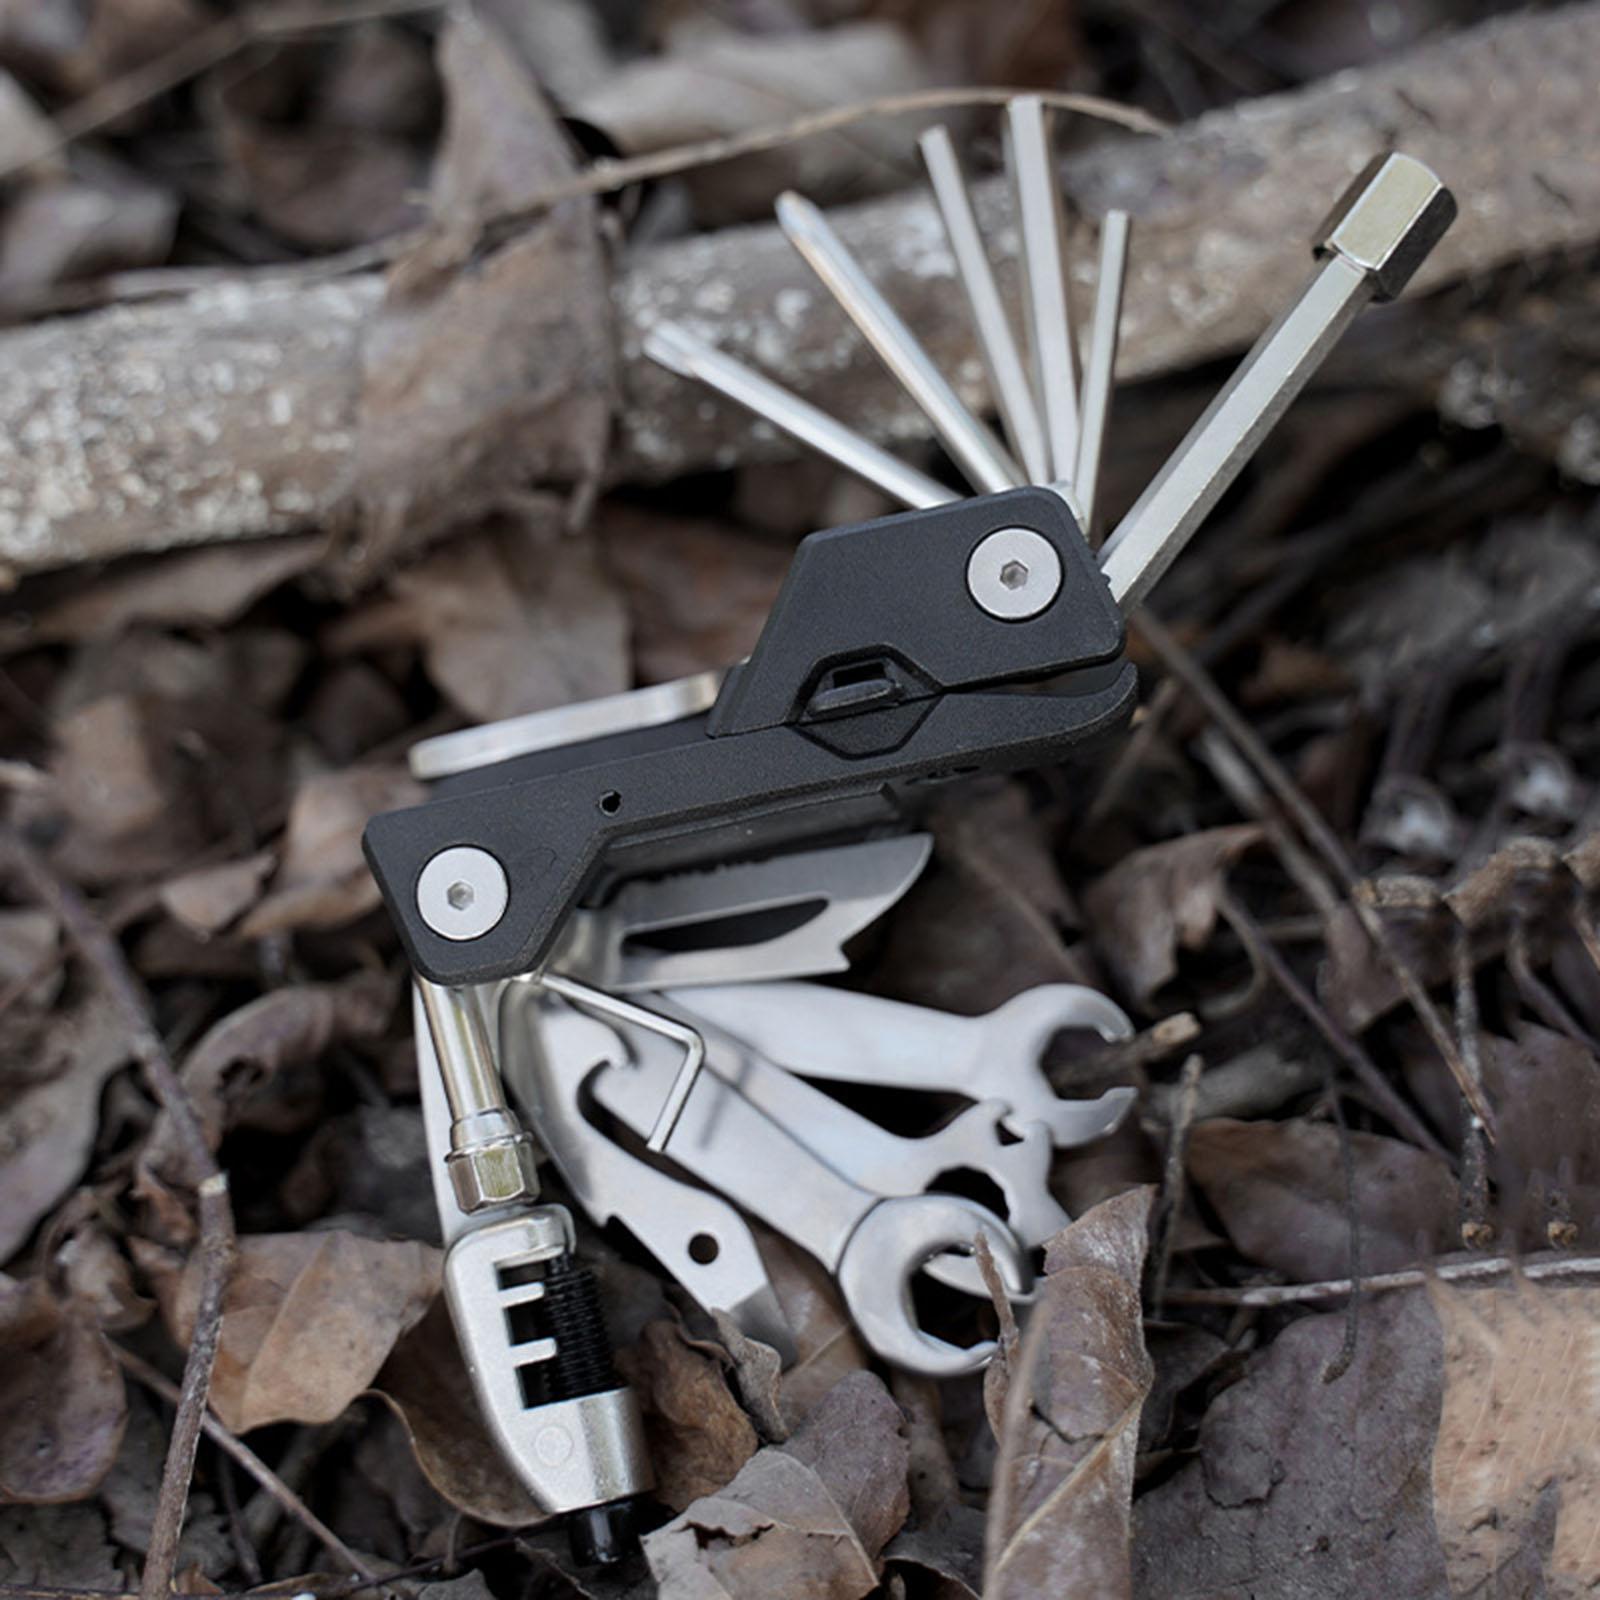 Bike Repair Tool Kit Screwdriver Multi Function for Emergency Maintenance Black